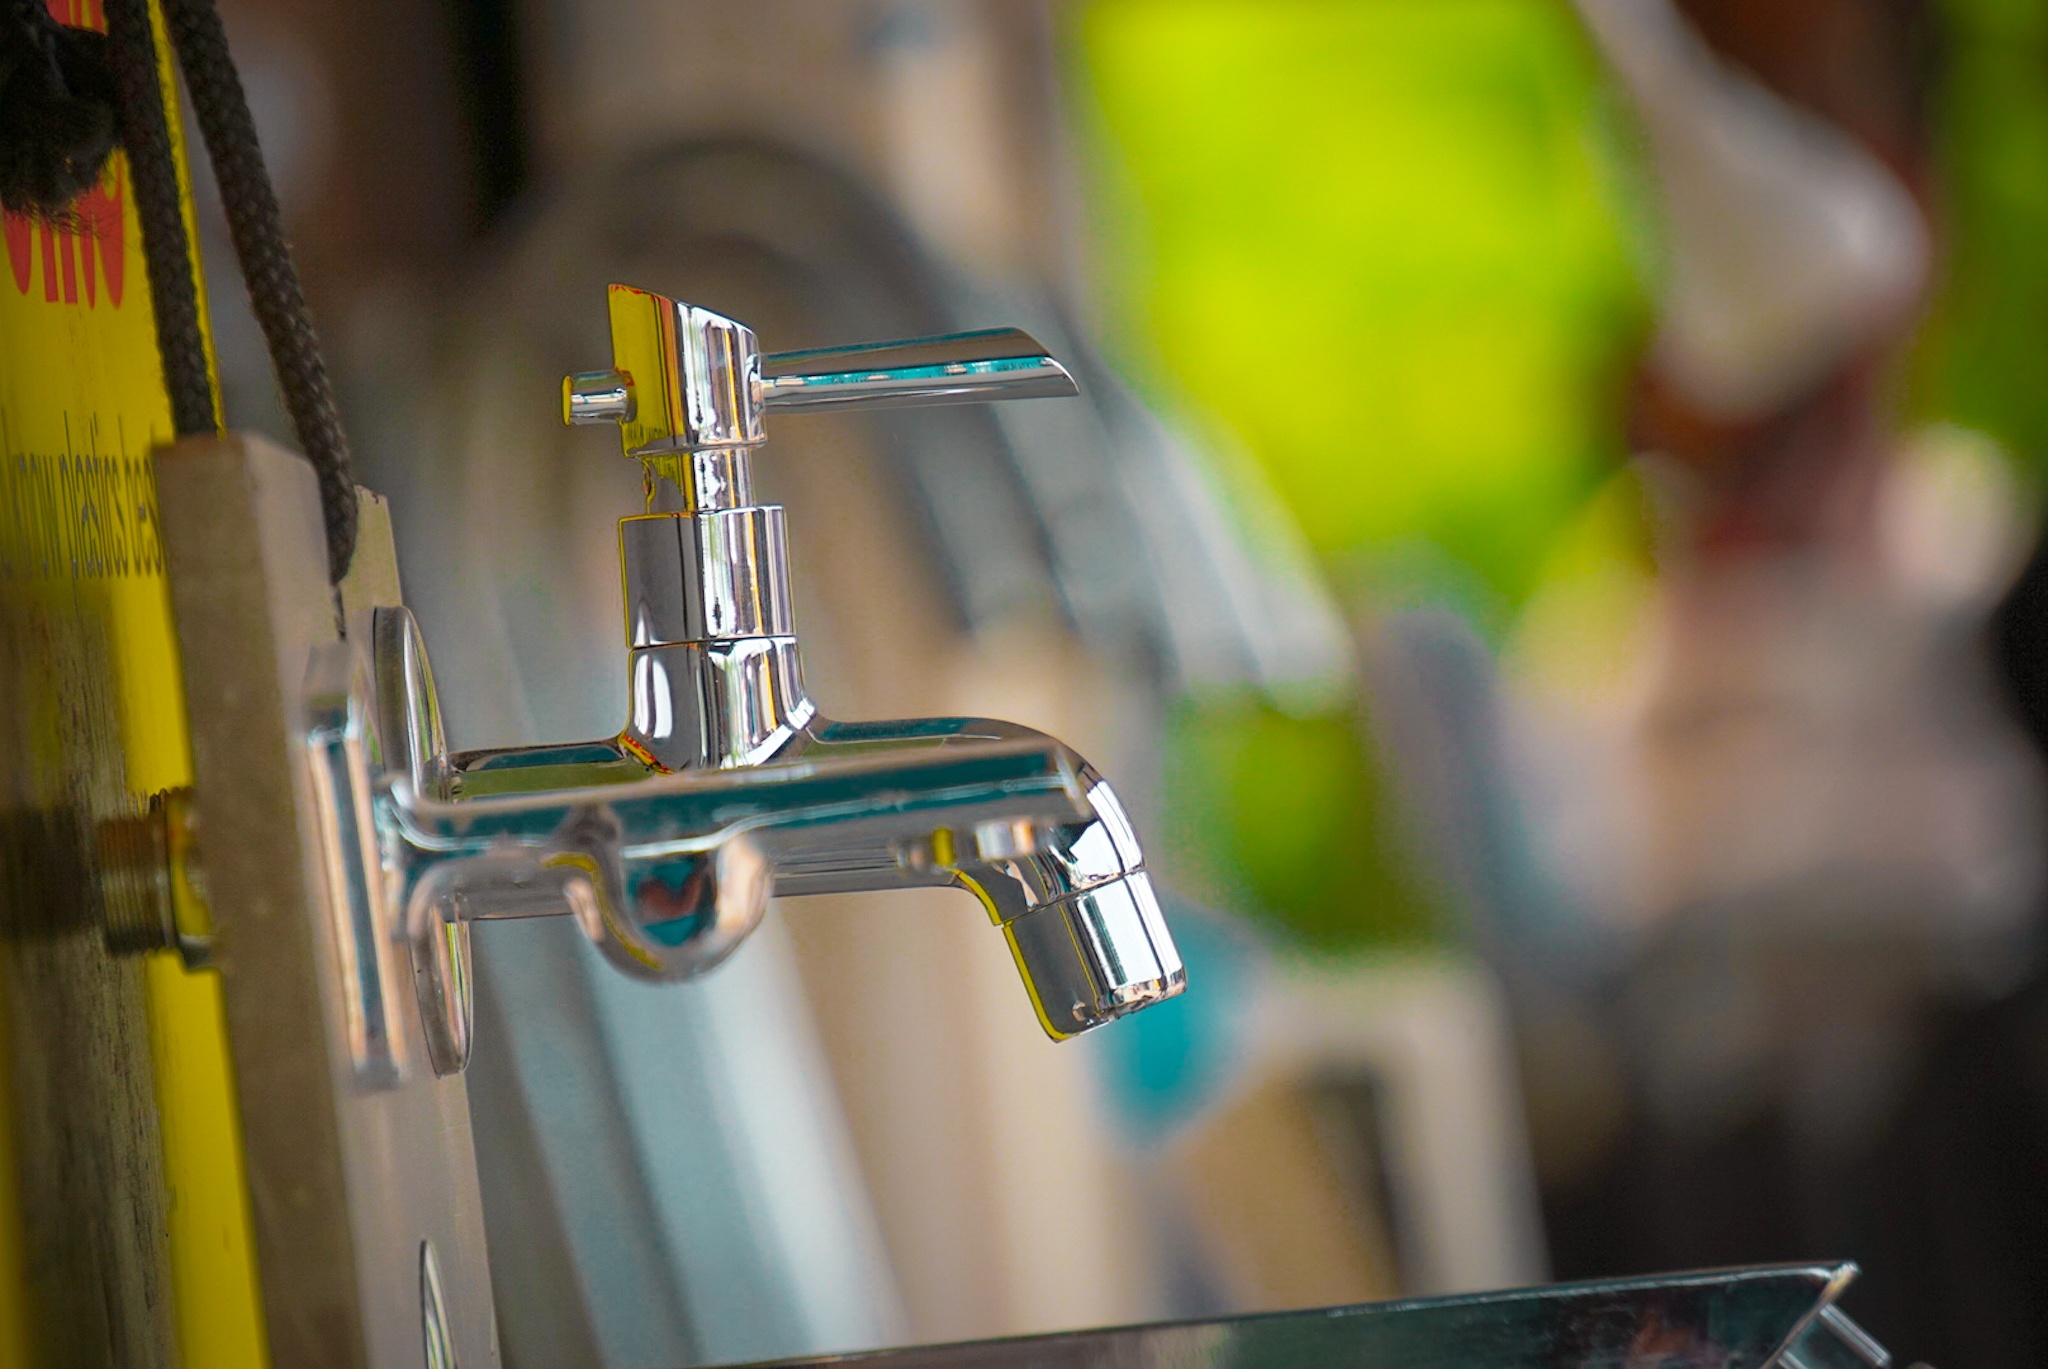 A metallic tap